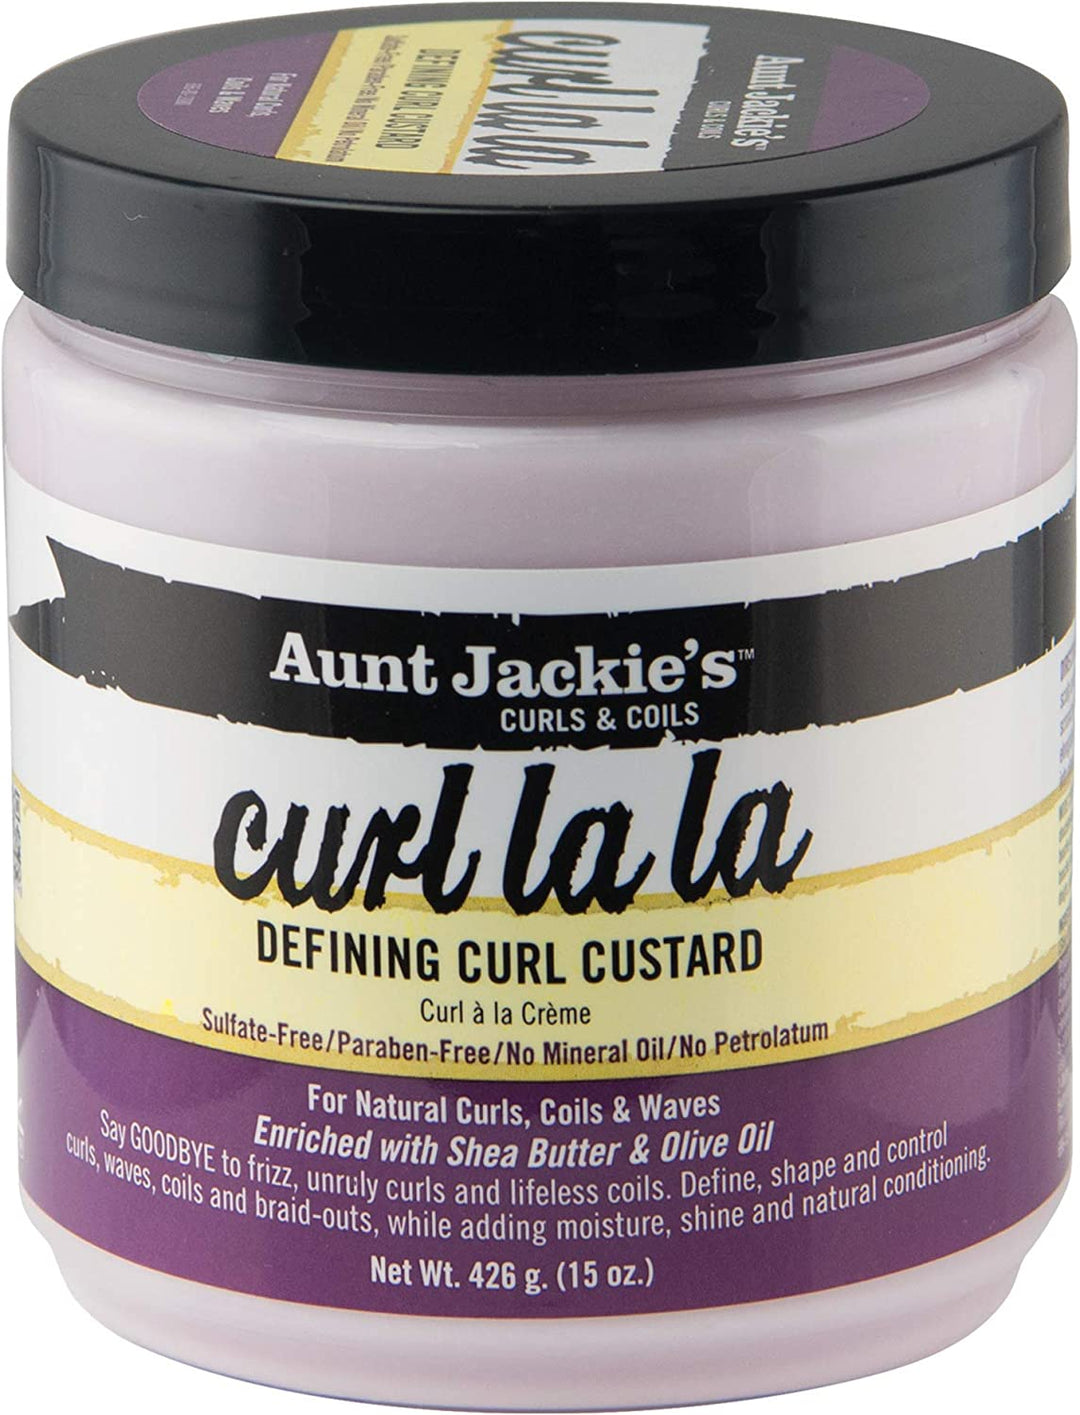 Aunt Jackie's Curl La La Defining Curl Custard, Fruity, 426 g